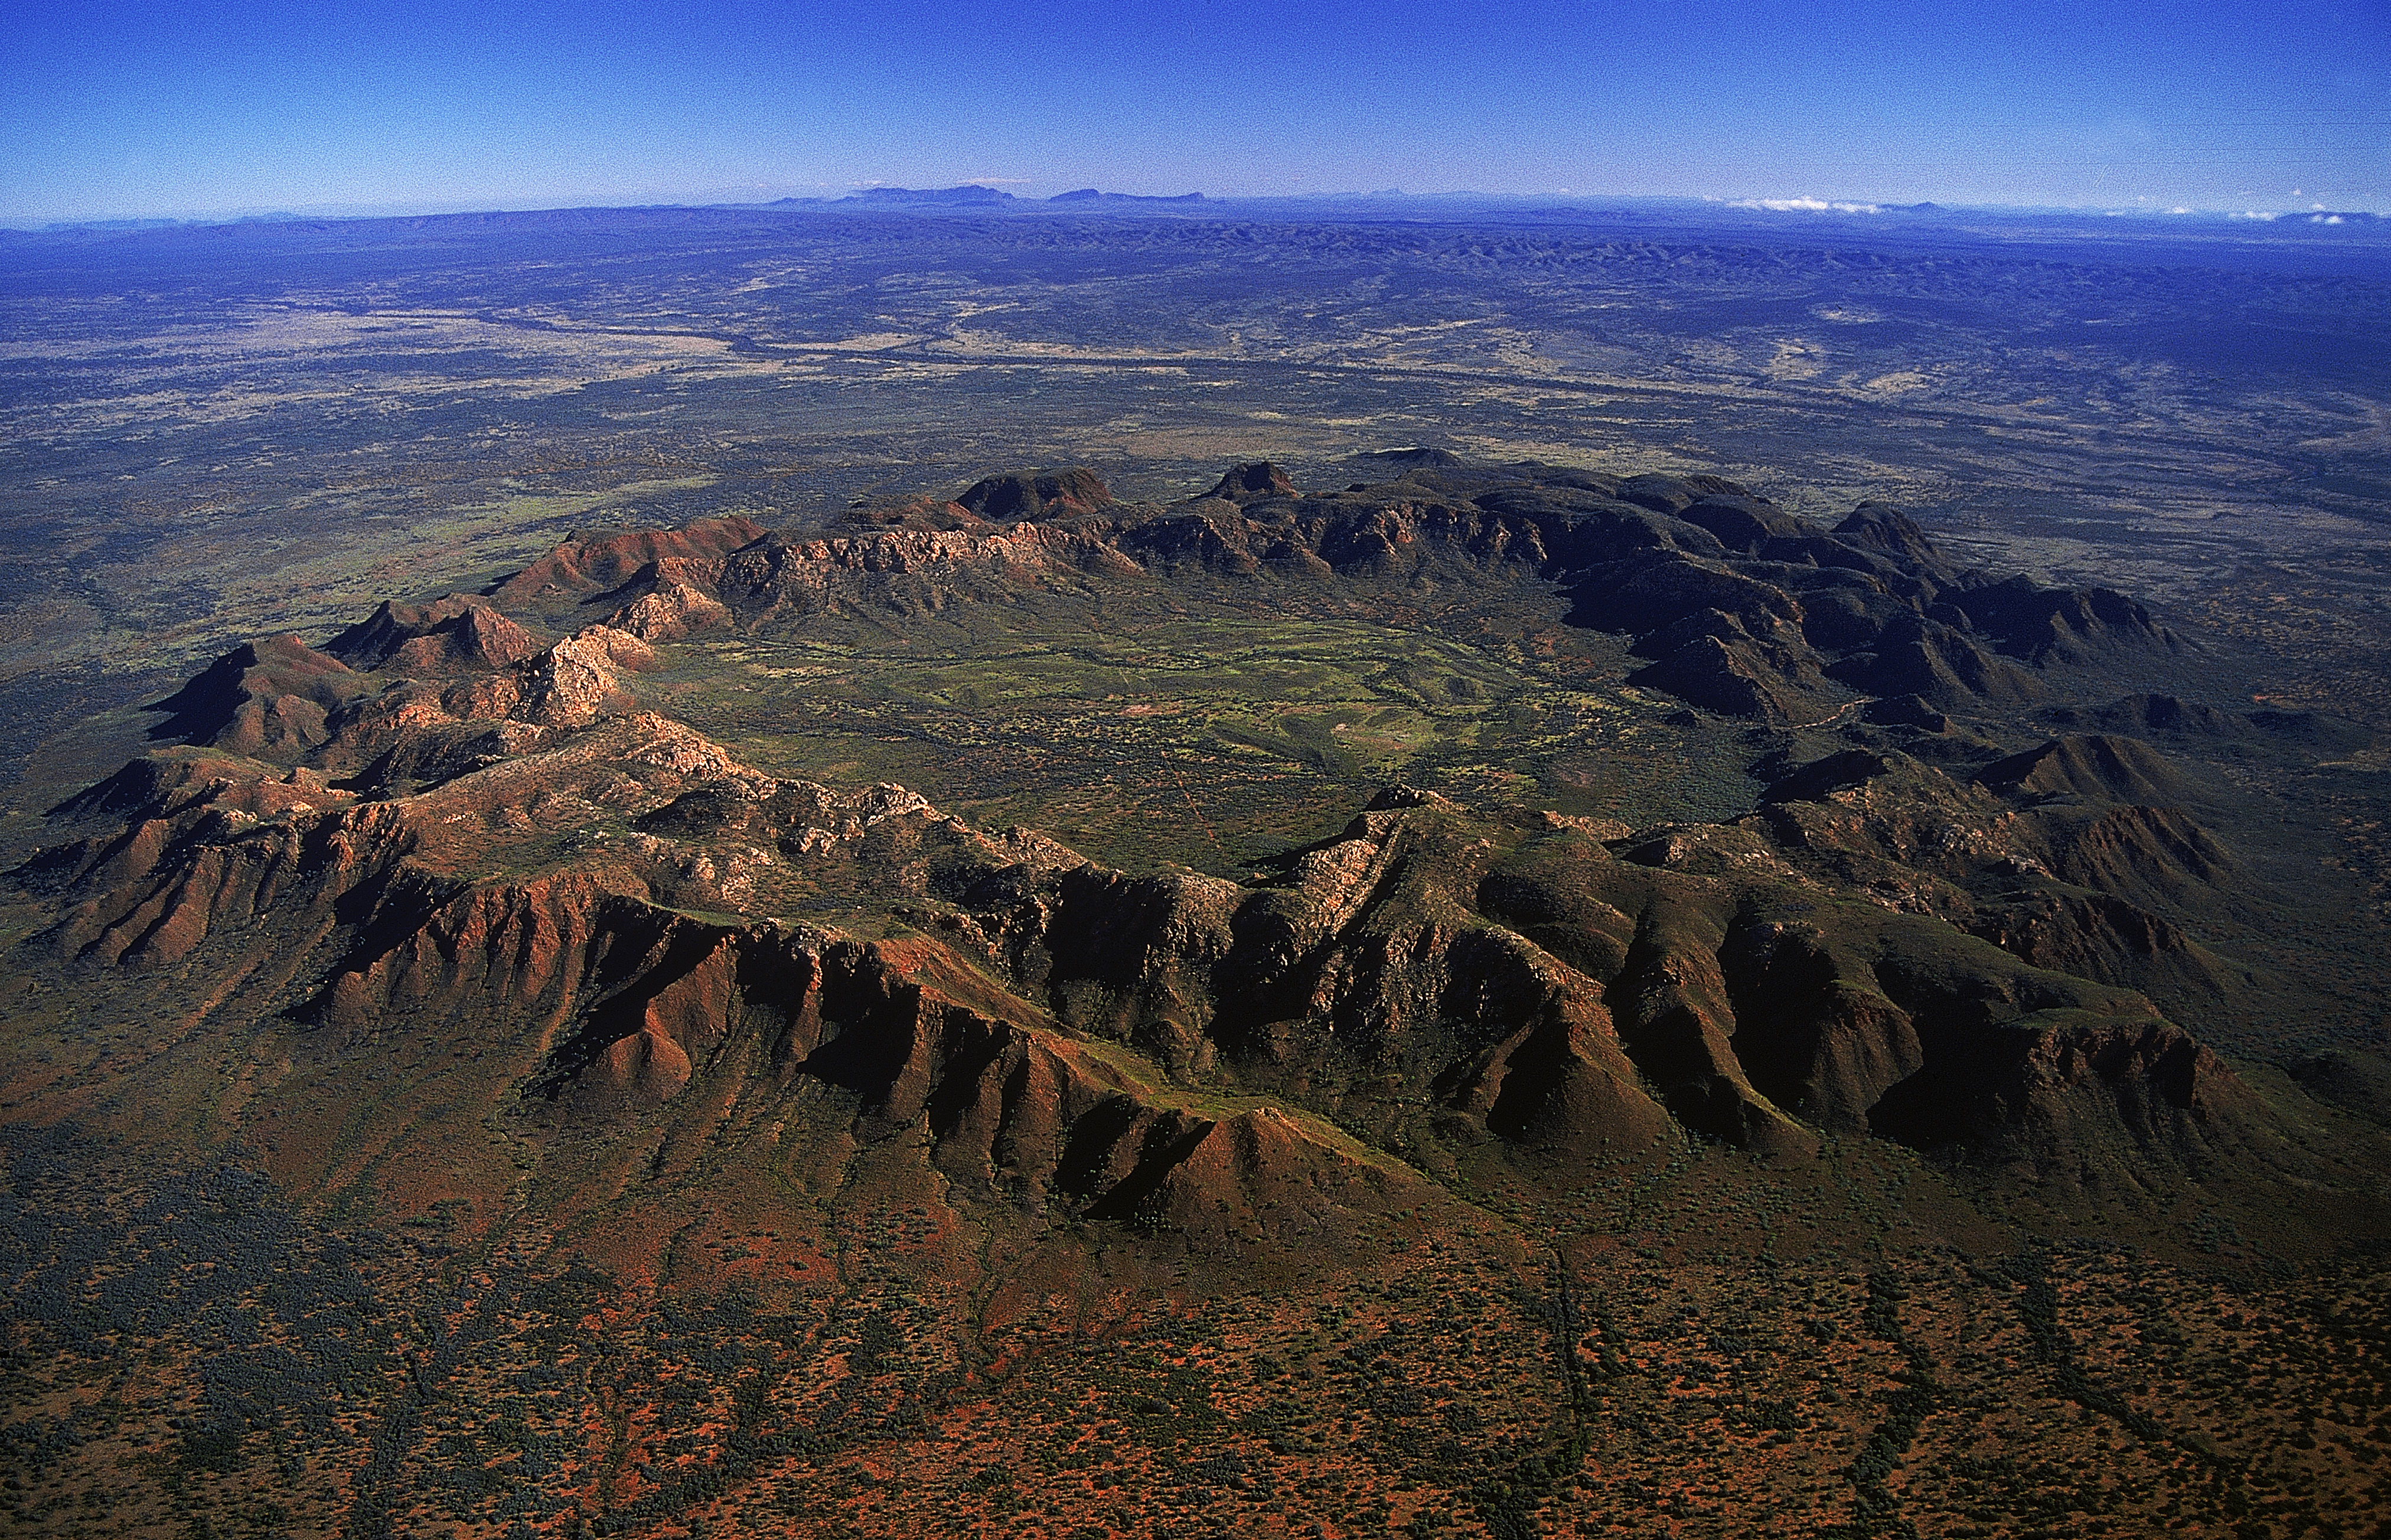 Планета земля пустыня. Госсес Блафф кратер. Вредефорт метеорит кратер. Африка кратер Вредефорт. Кратер Вредефорт ЮАР.